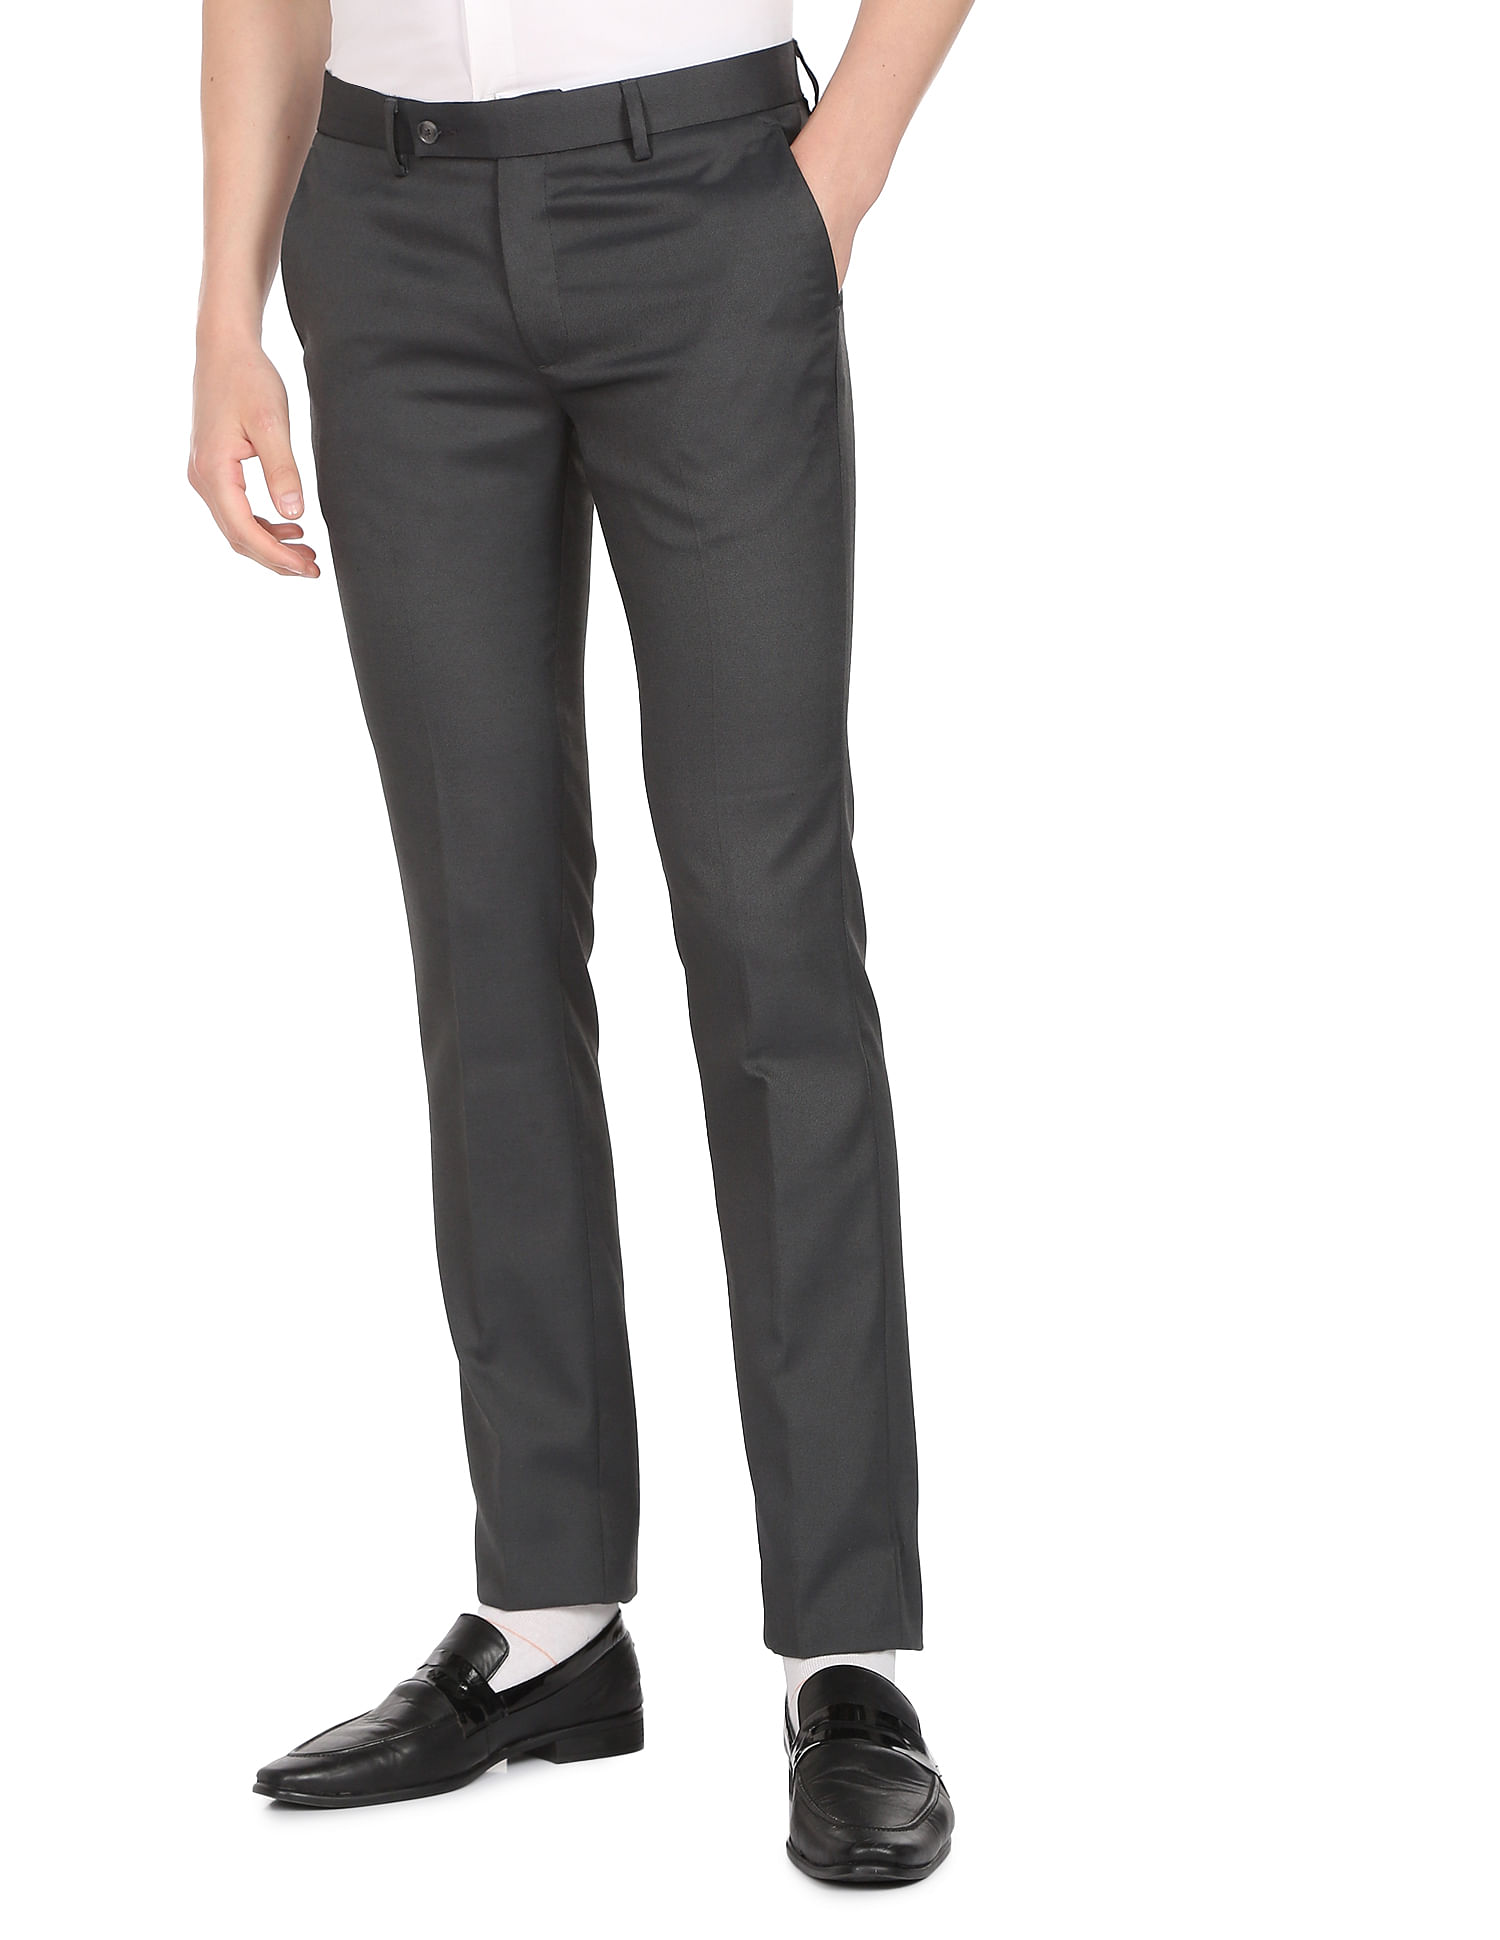 Online Blackberry Men Formal grey trouser Prices - Shopclues India